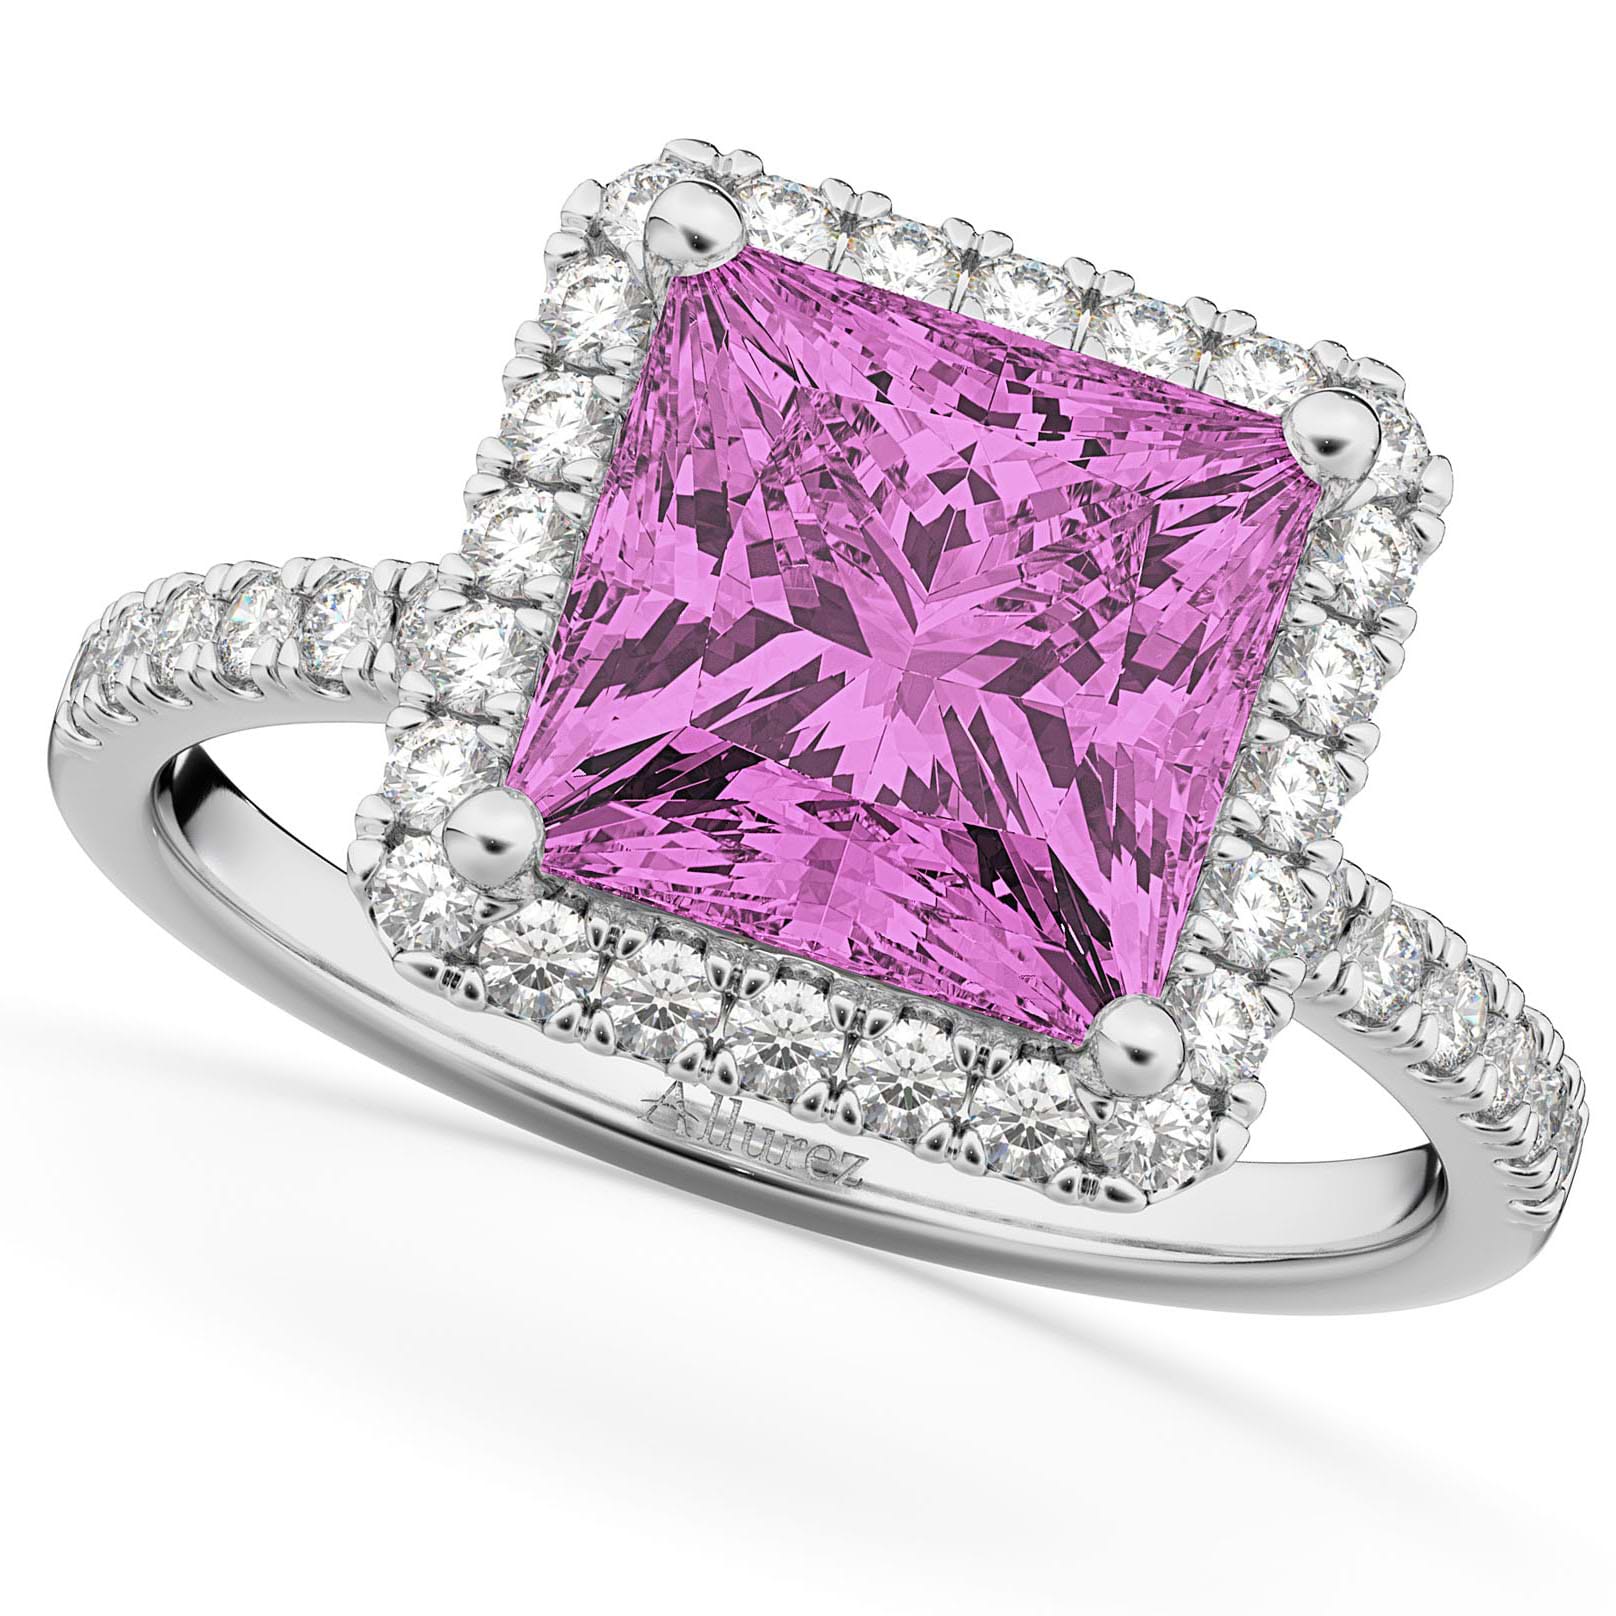 Princess Cut Halo Pink Sapphire & Diamond Engagement Ring 14K White Gold 3.47ct